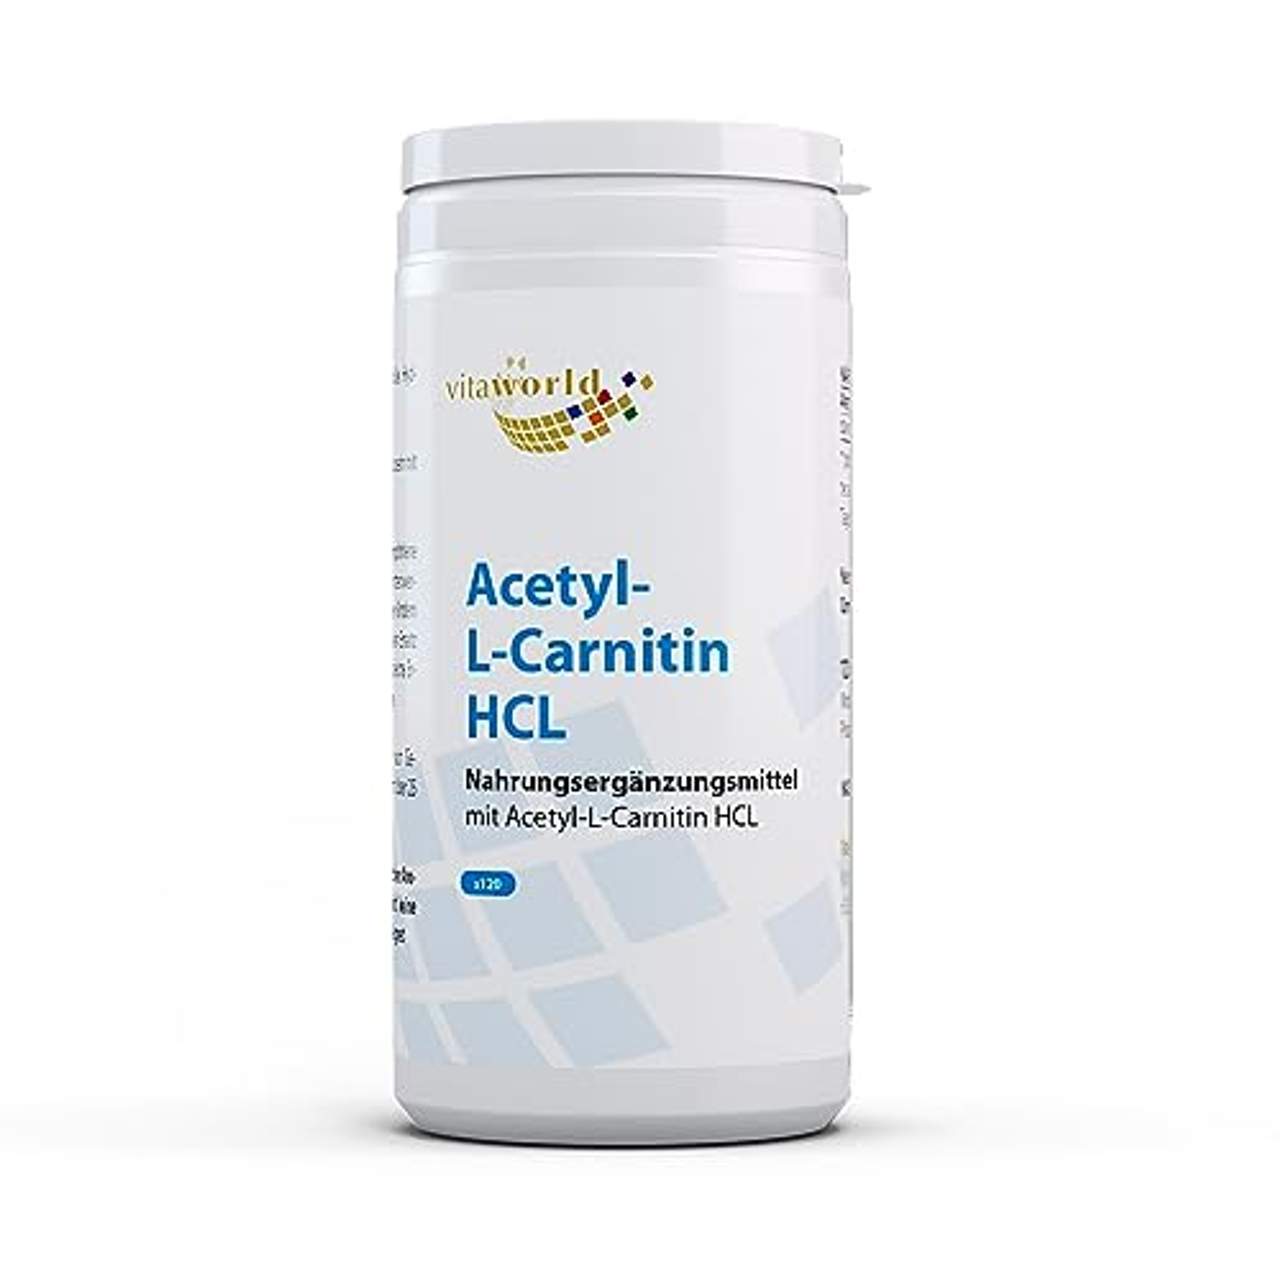 Vita World Acetyl-L-Carnitin HCL 1000mg pro Kapsel 120 Kapseln hohe Bioverfügbarkeit